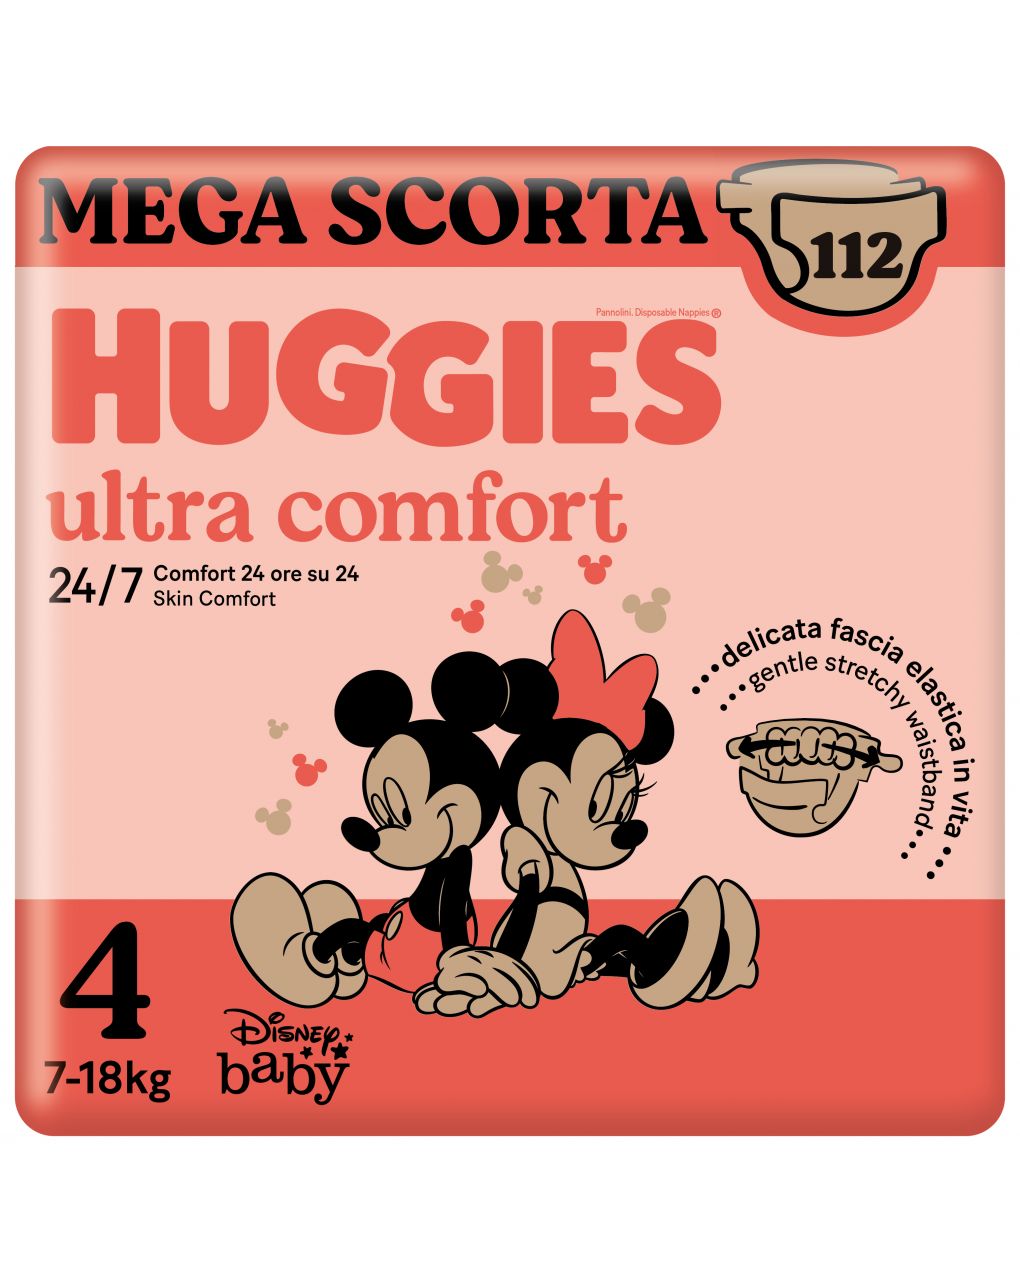 Pannolini ultra comfort megapack tg.4 - 112 pezzi - huggies - Huggies